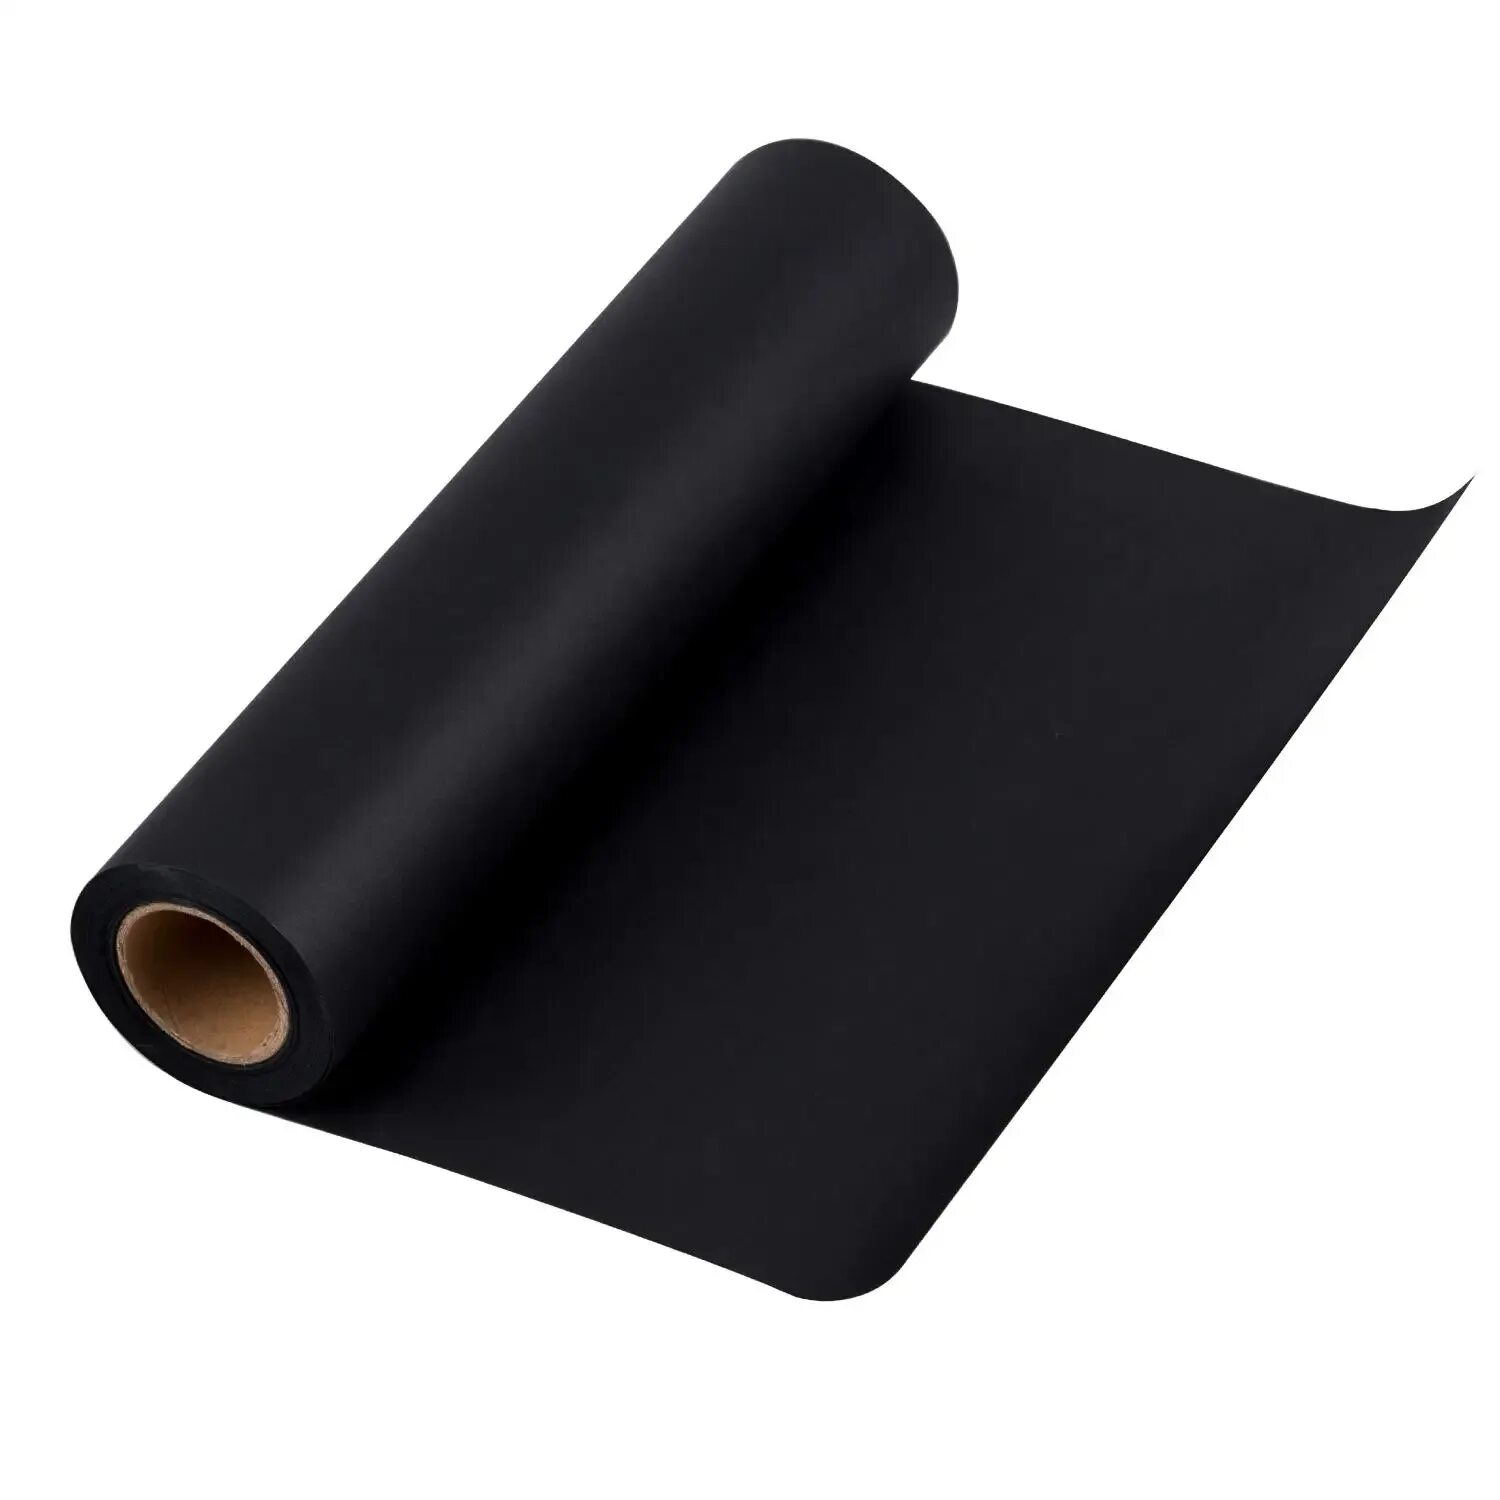 Черная матовая бумага. Бумага битумированная п-350. Рулон черной крафт-бумаги 120 г/м2. Черная упаковочная бумага. Бумага битумированная.